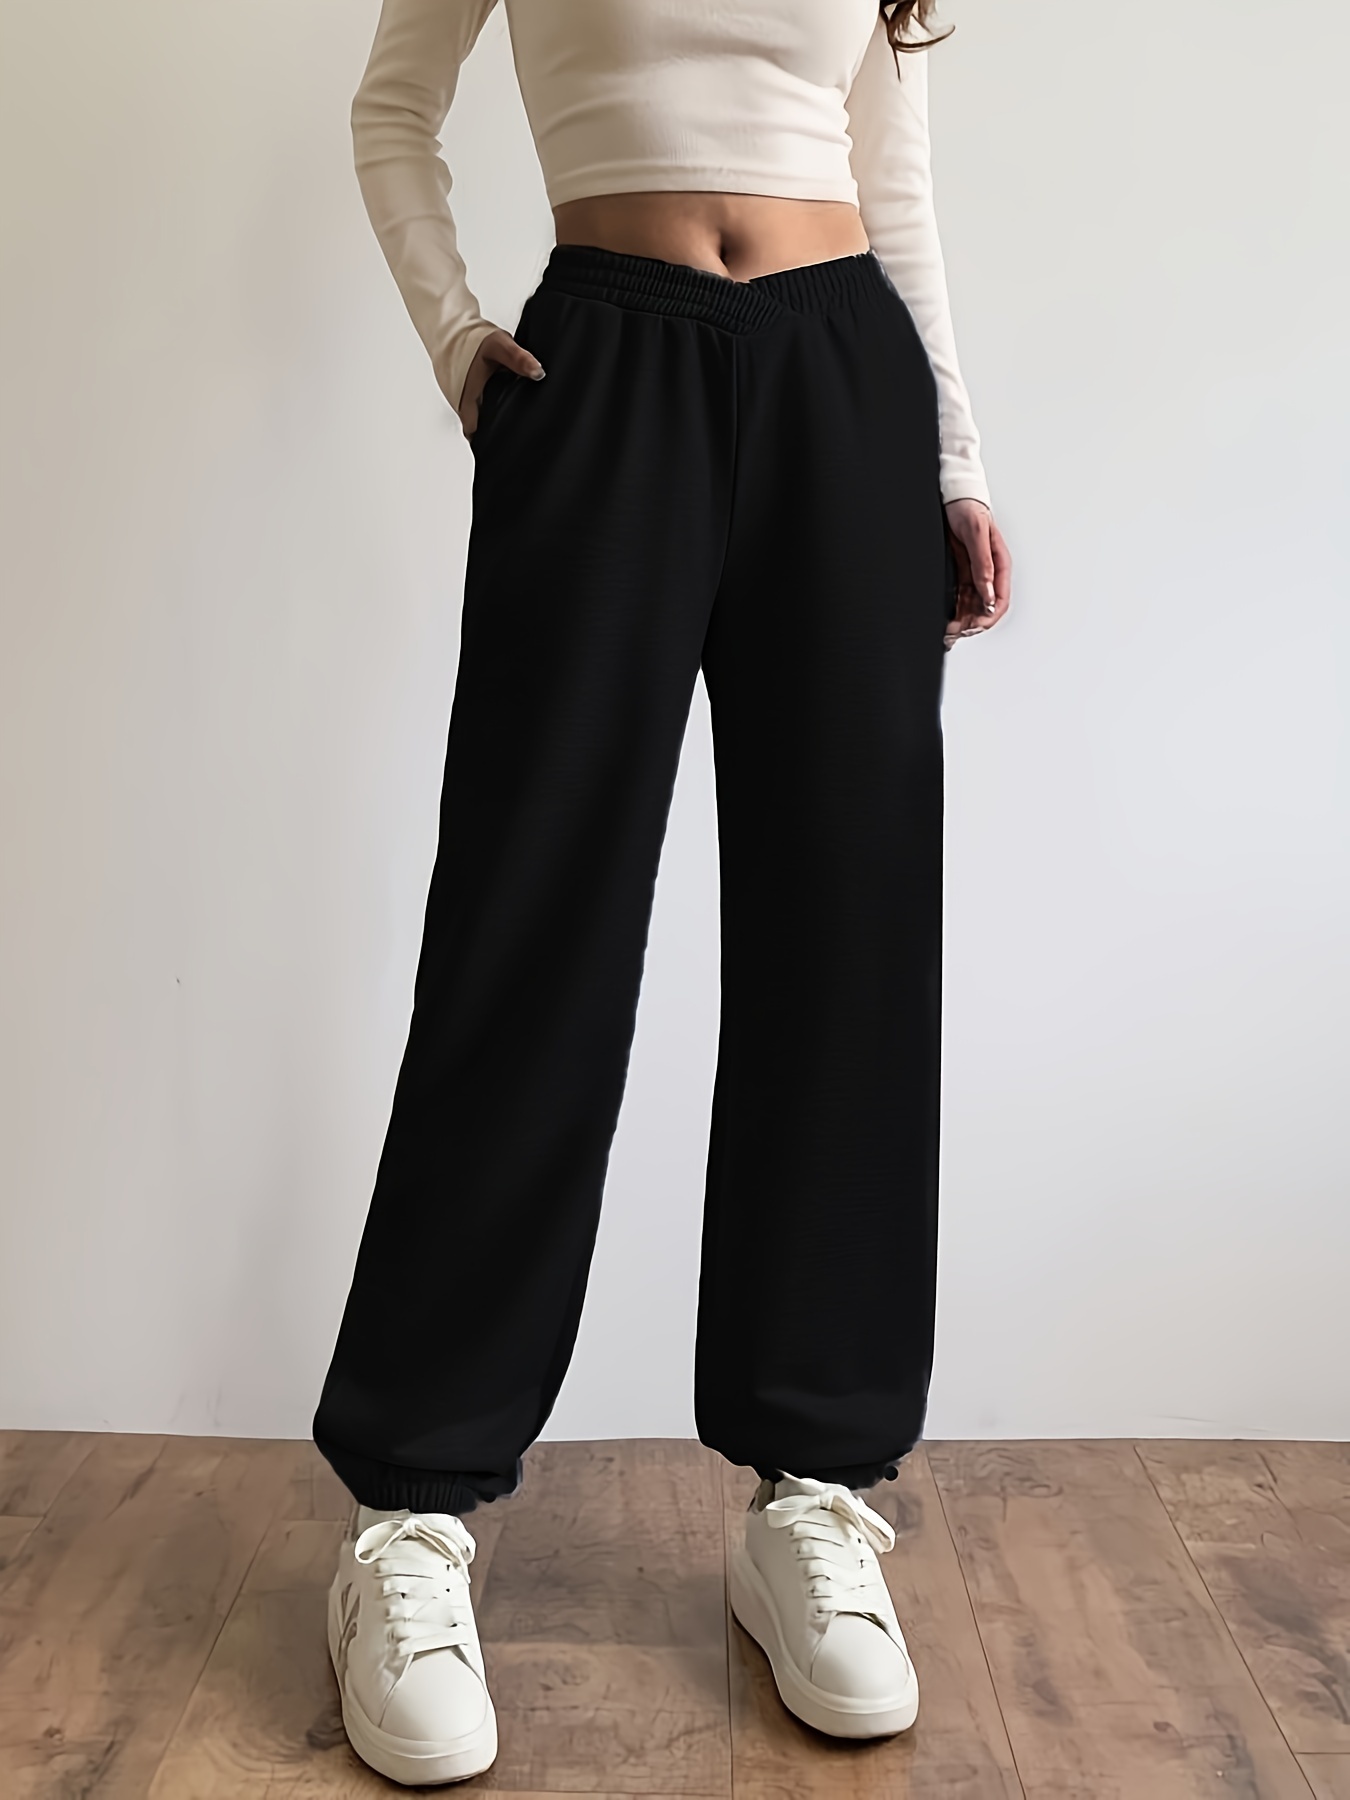 Comfy USA Black Regular Size Pants for Women for sale